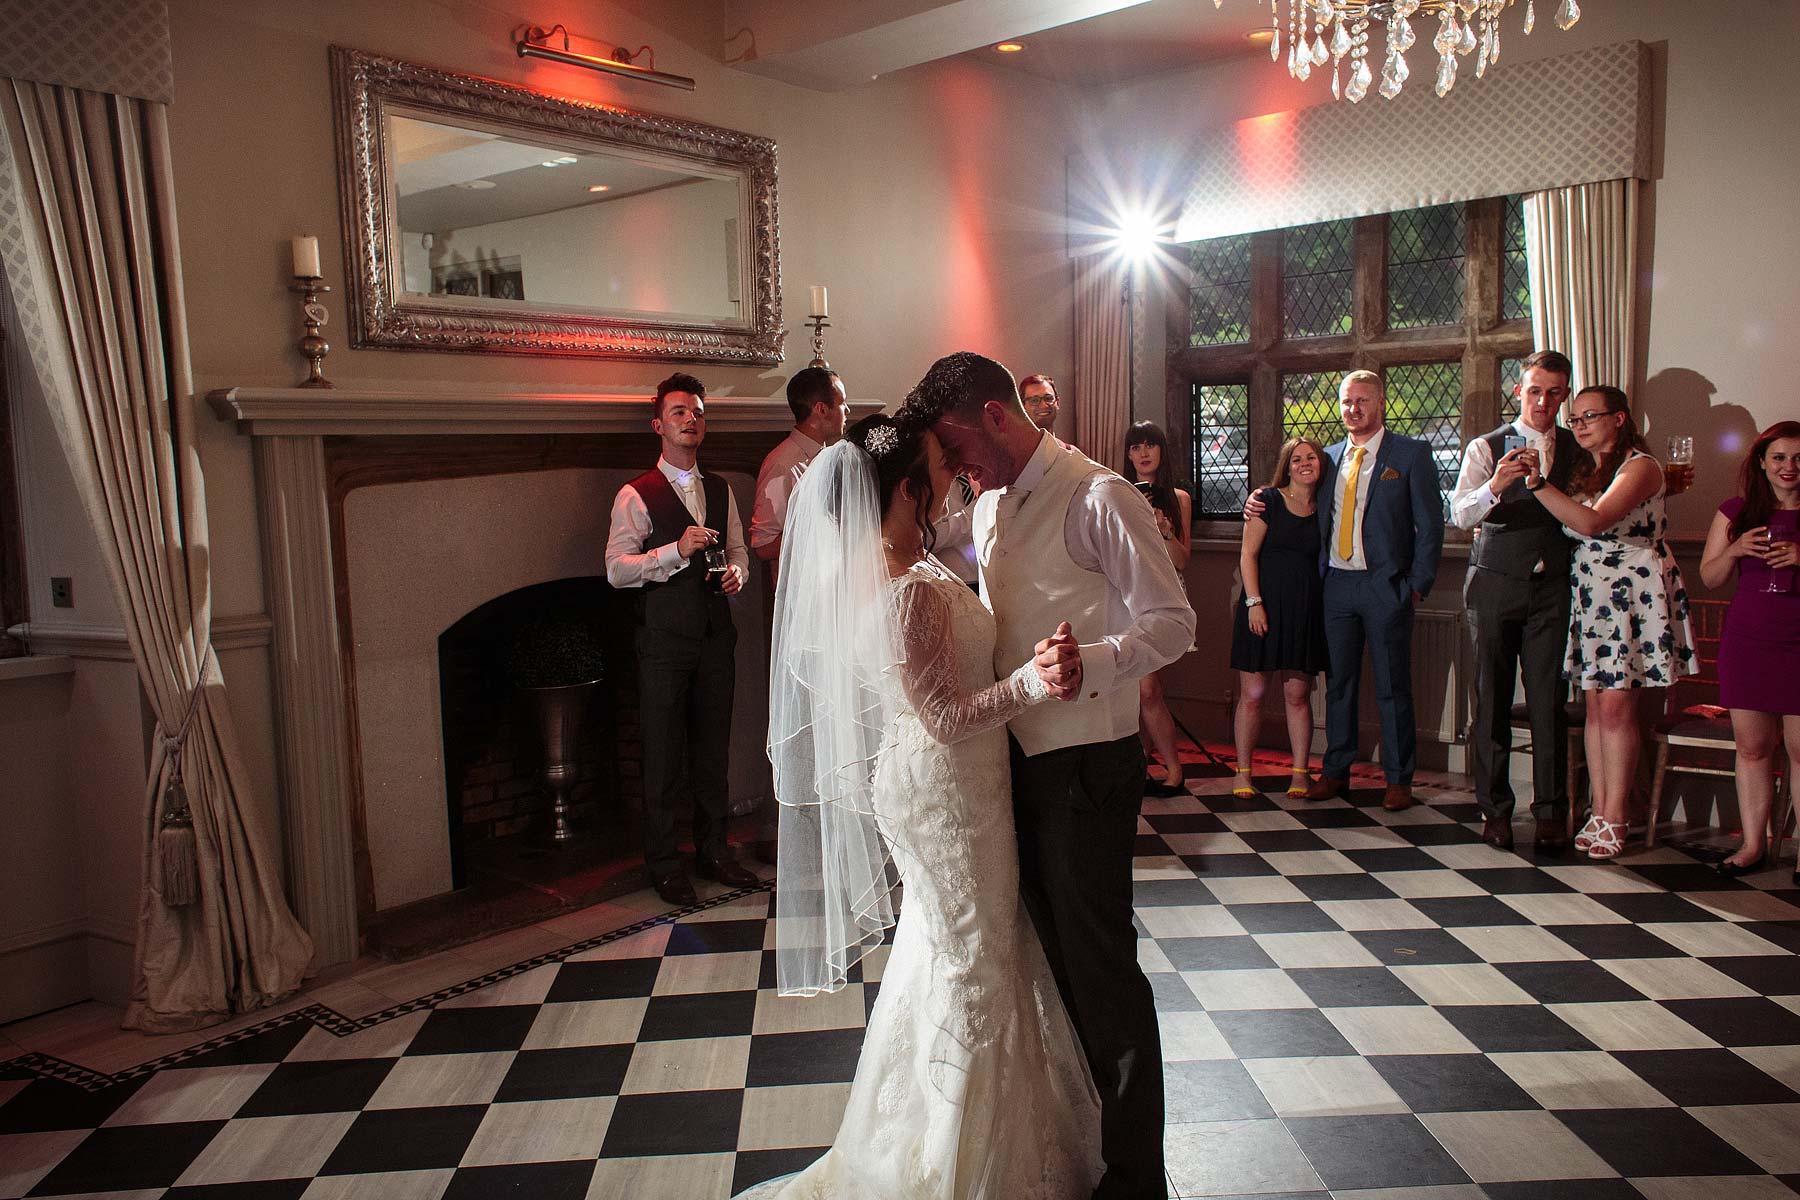 Creative documentary wedding photography story of Lyndsey + Howard's Weston Hall Wedding photographers Stuart James capturing the day